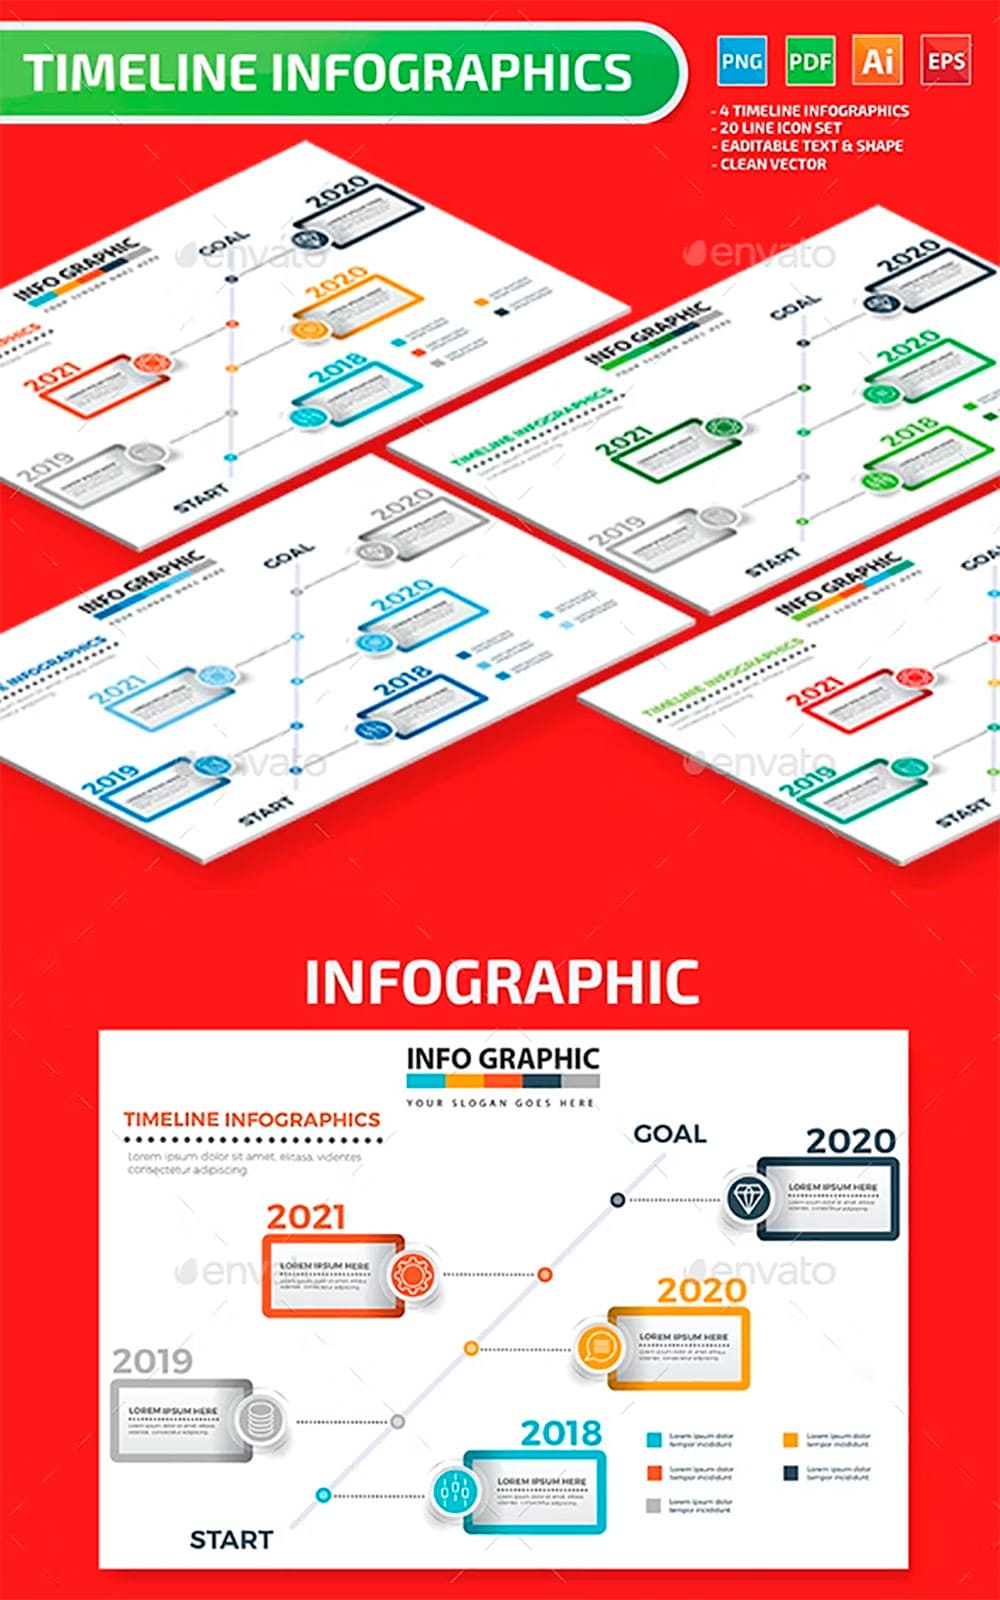 Timeline infographics design, picture for pinterest.